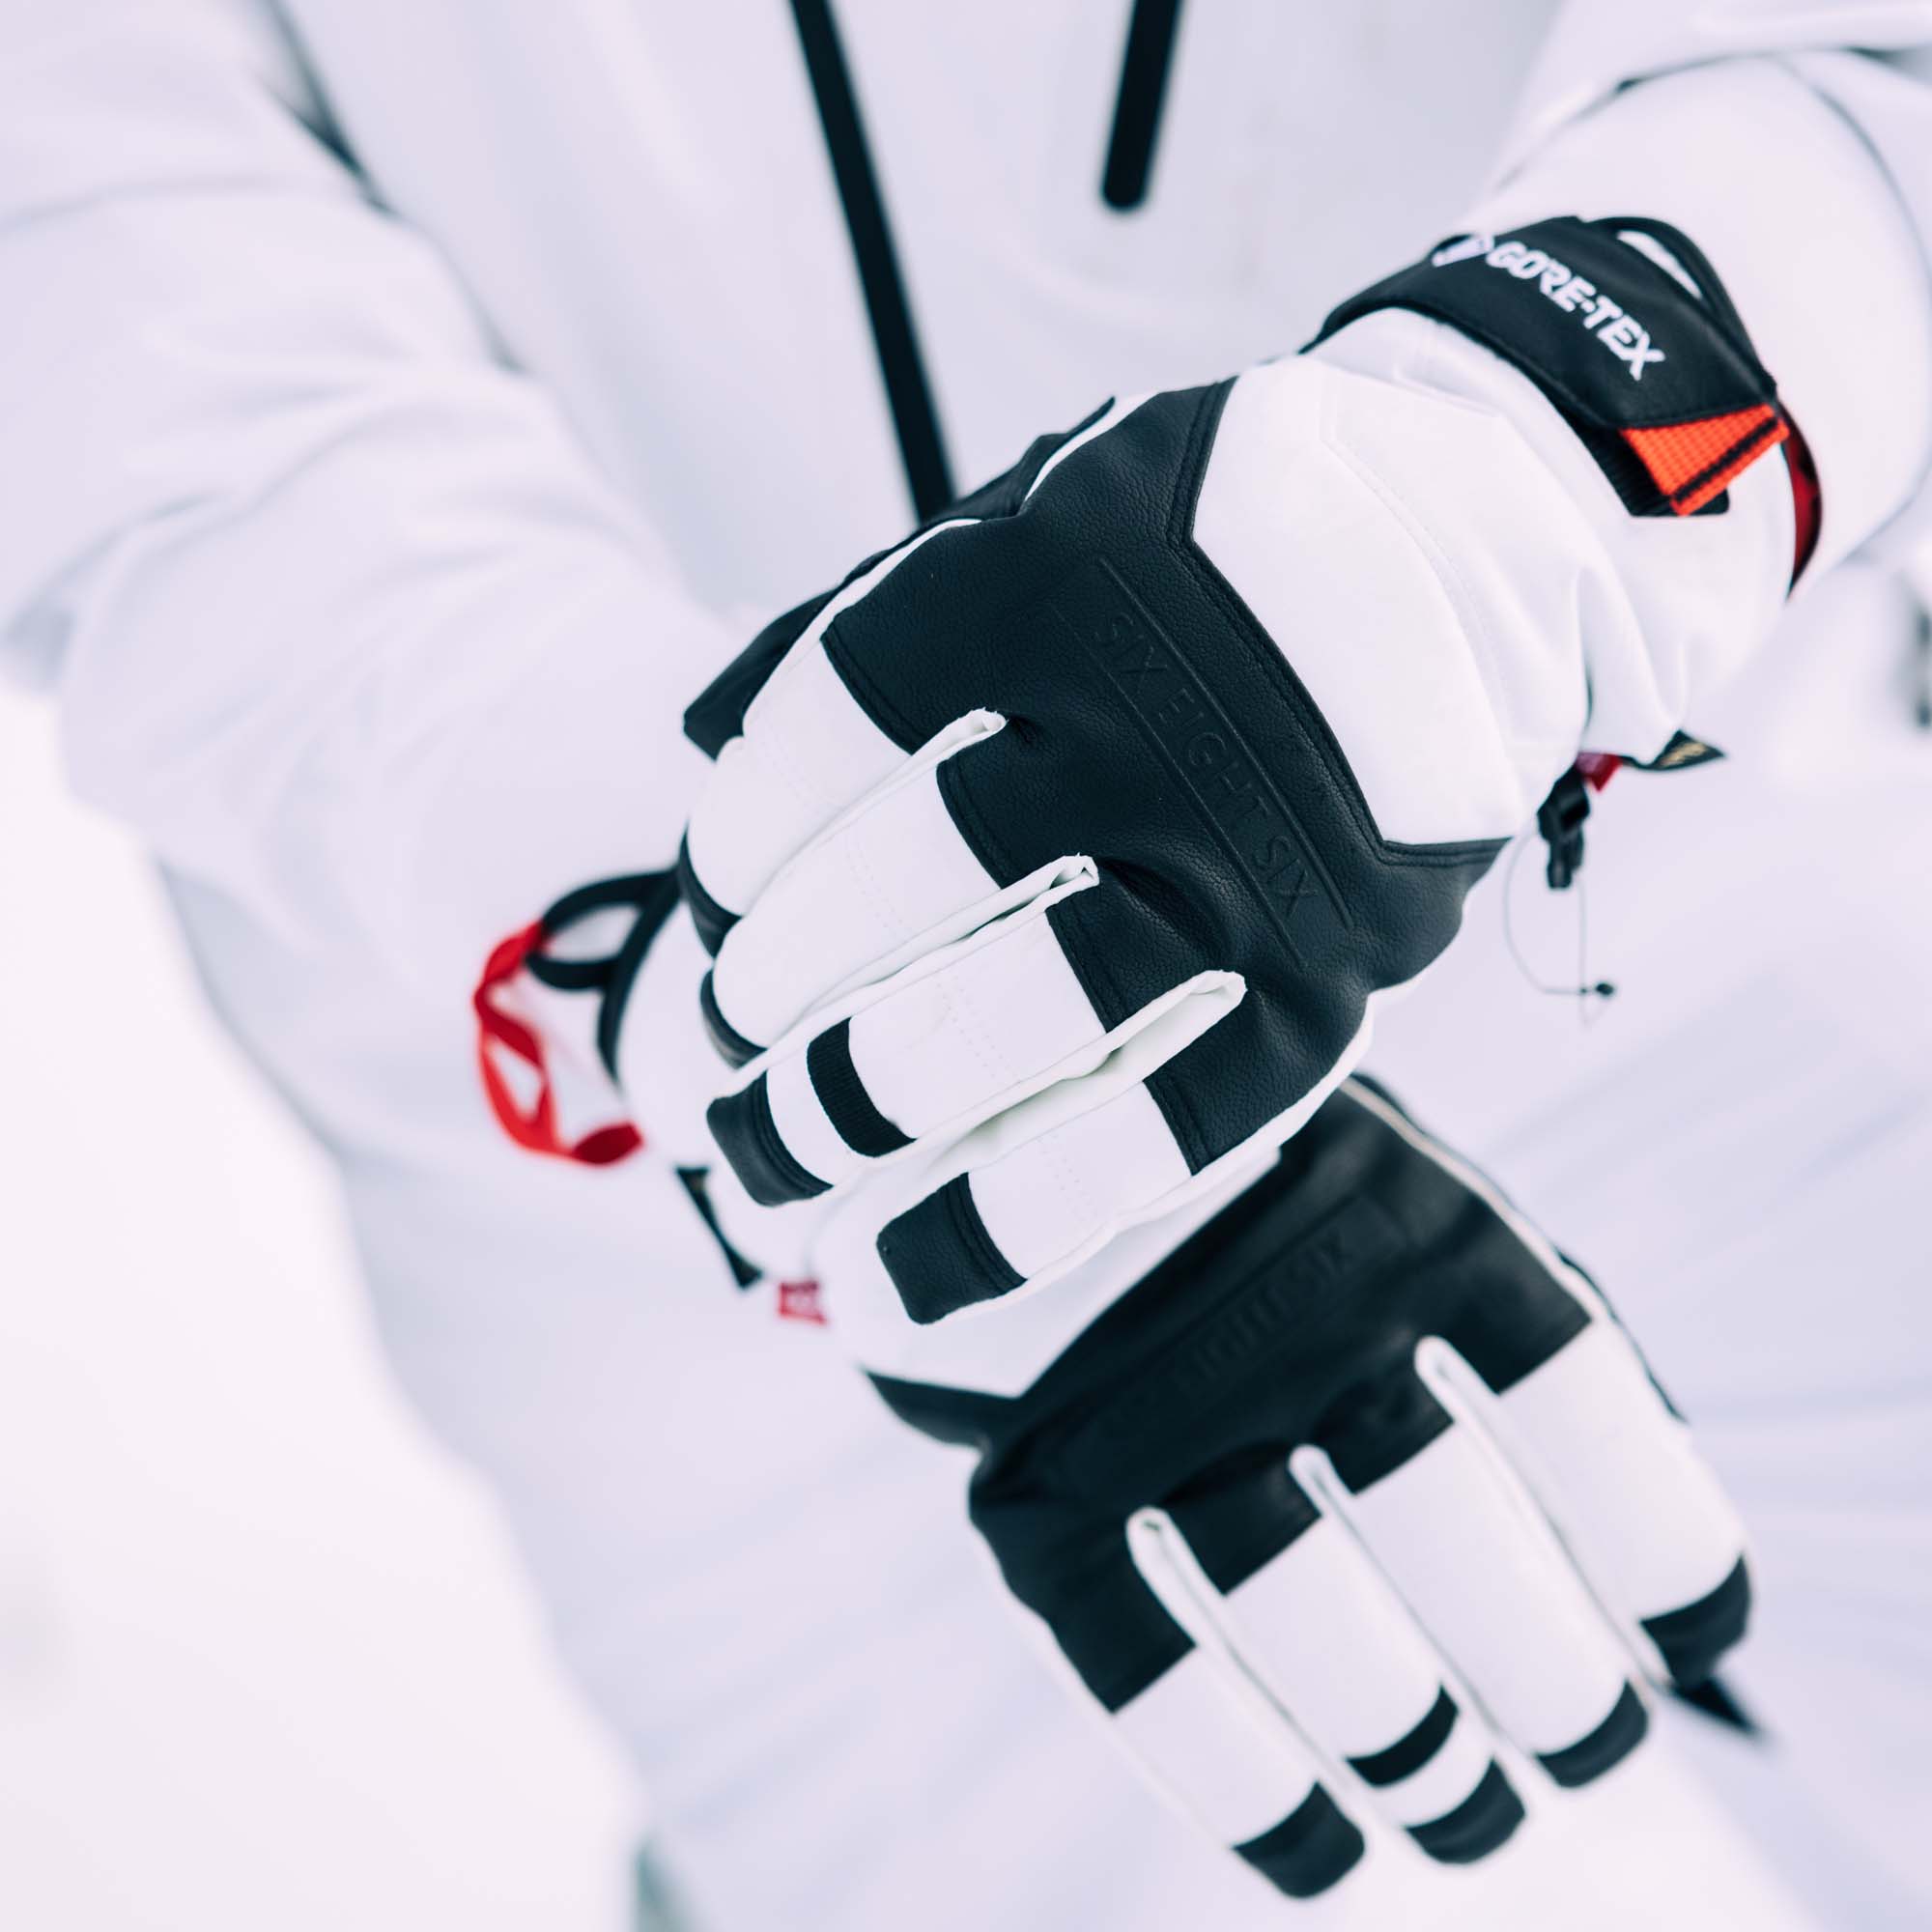 686 GTX Apex Insulated Snowboard/Ski Gloves